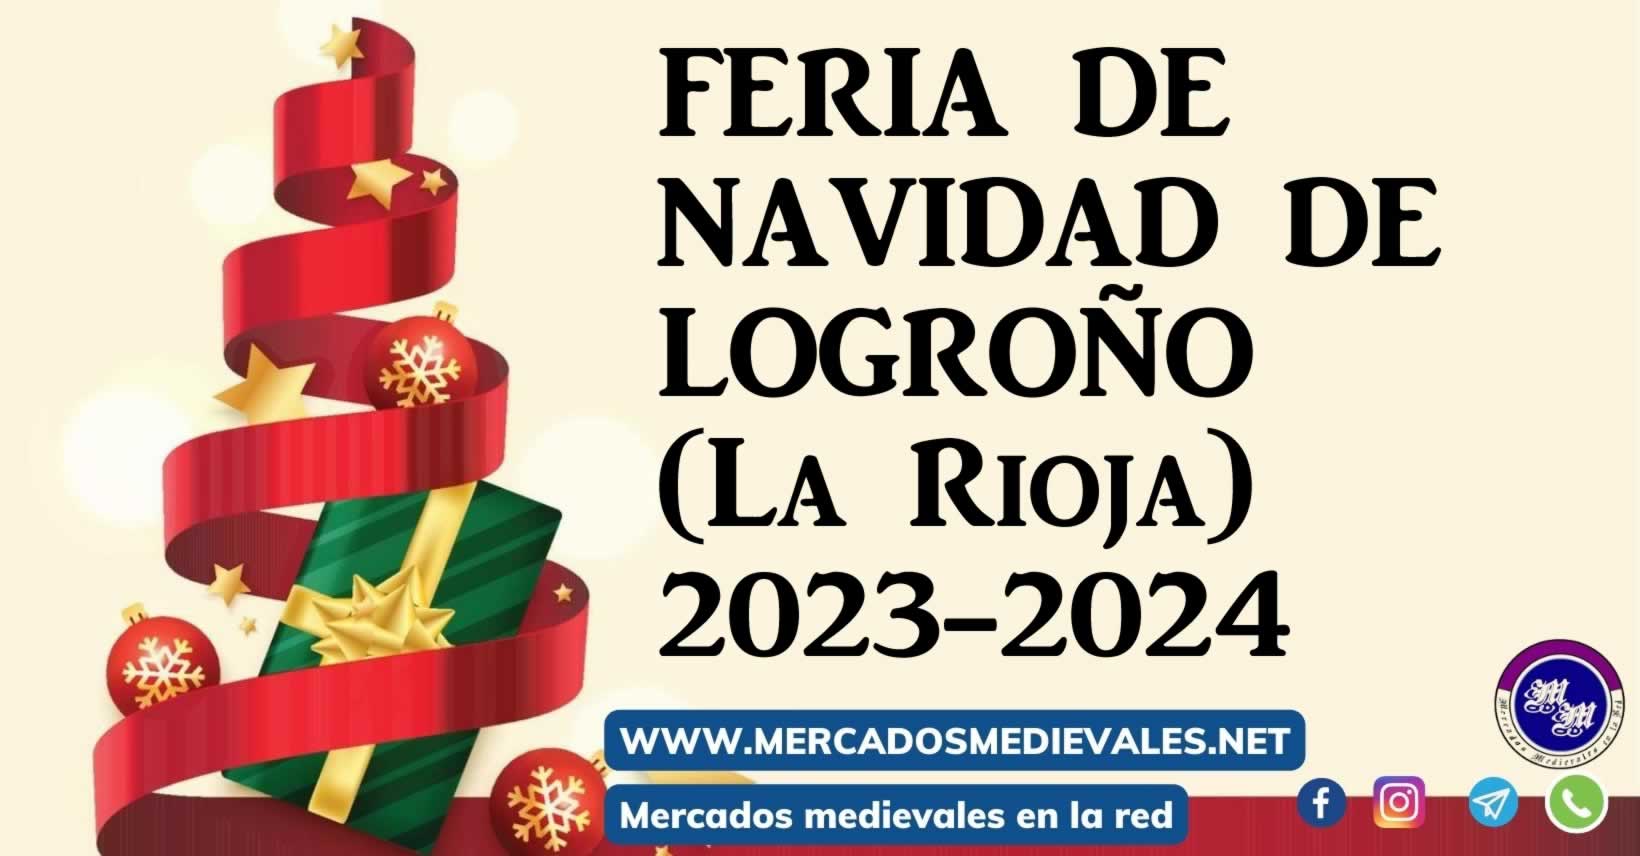 Feria de navidad de Logroño